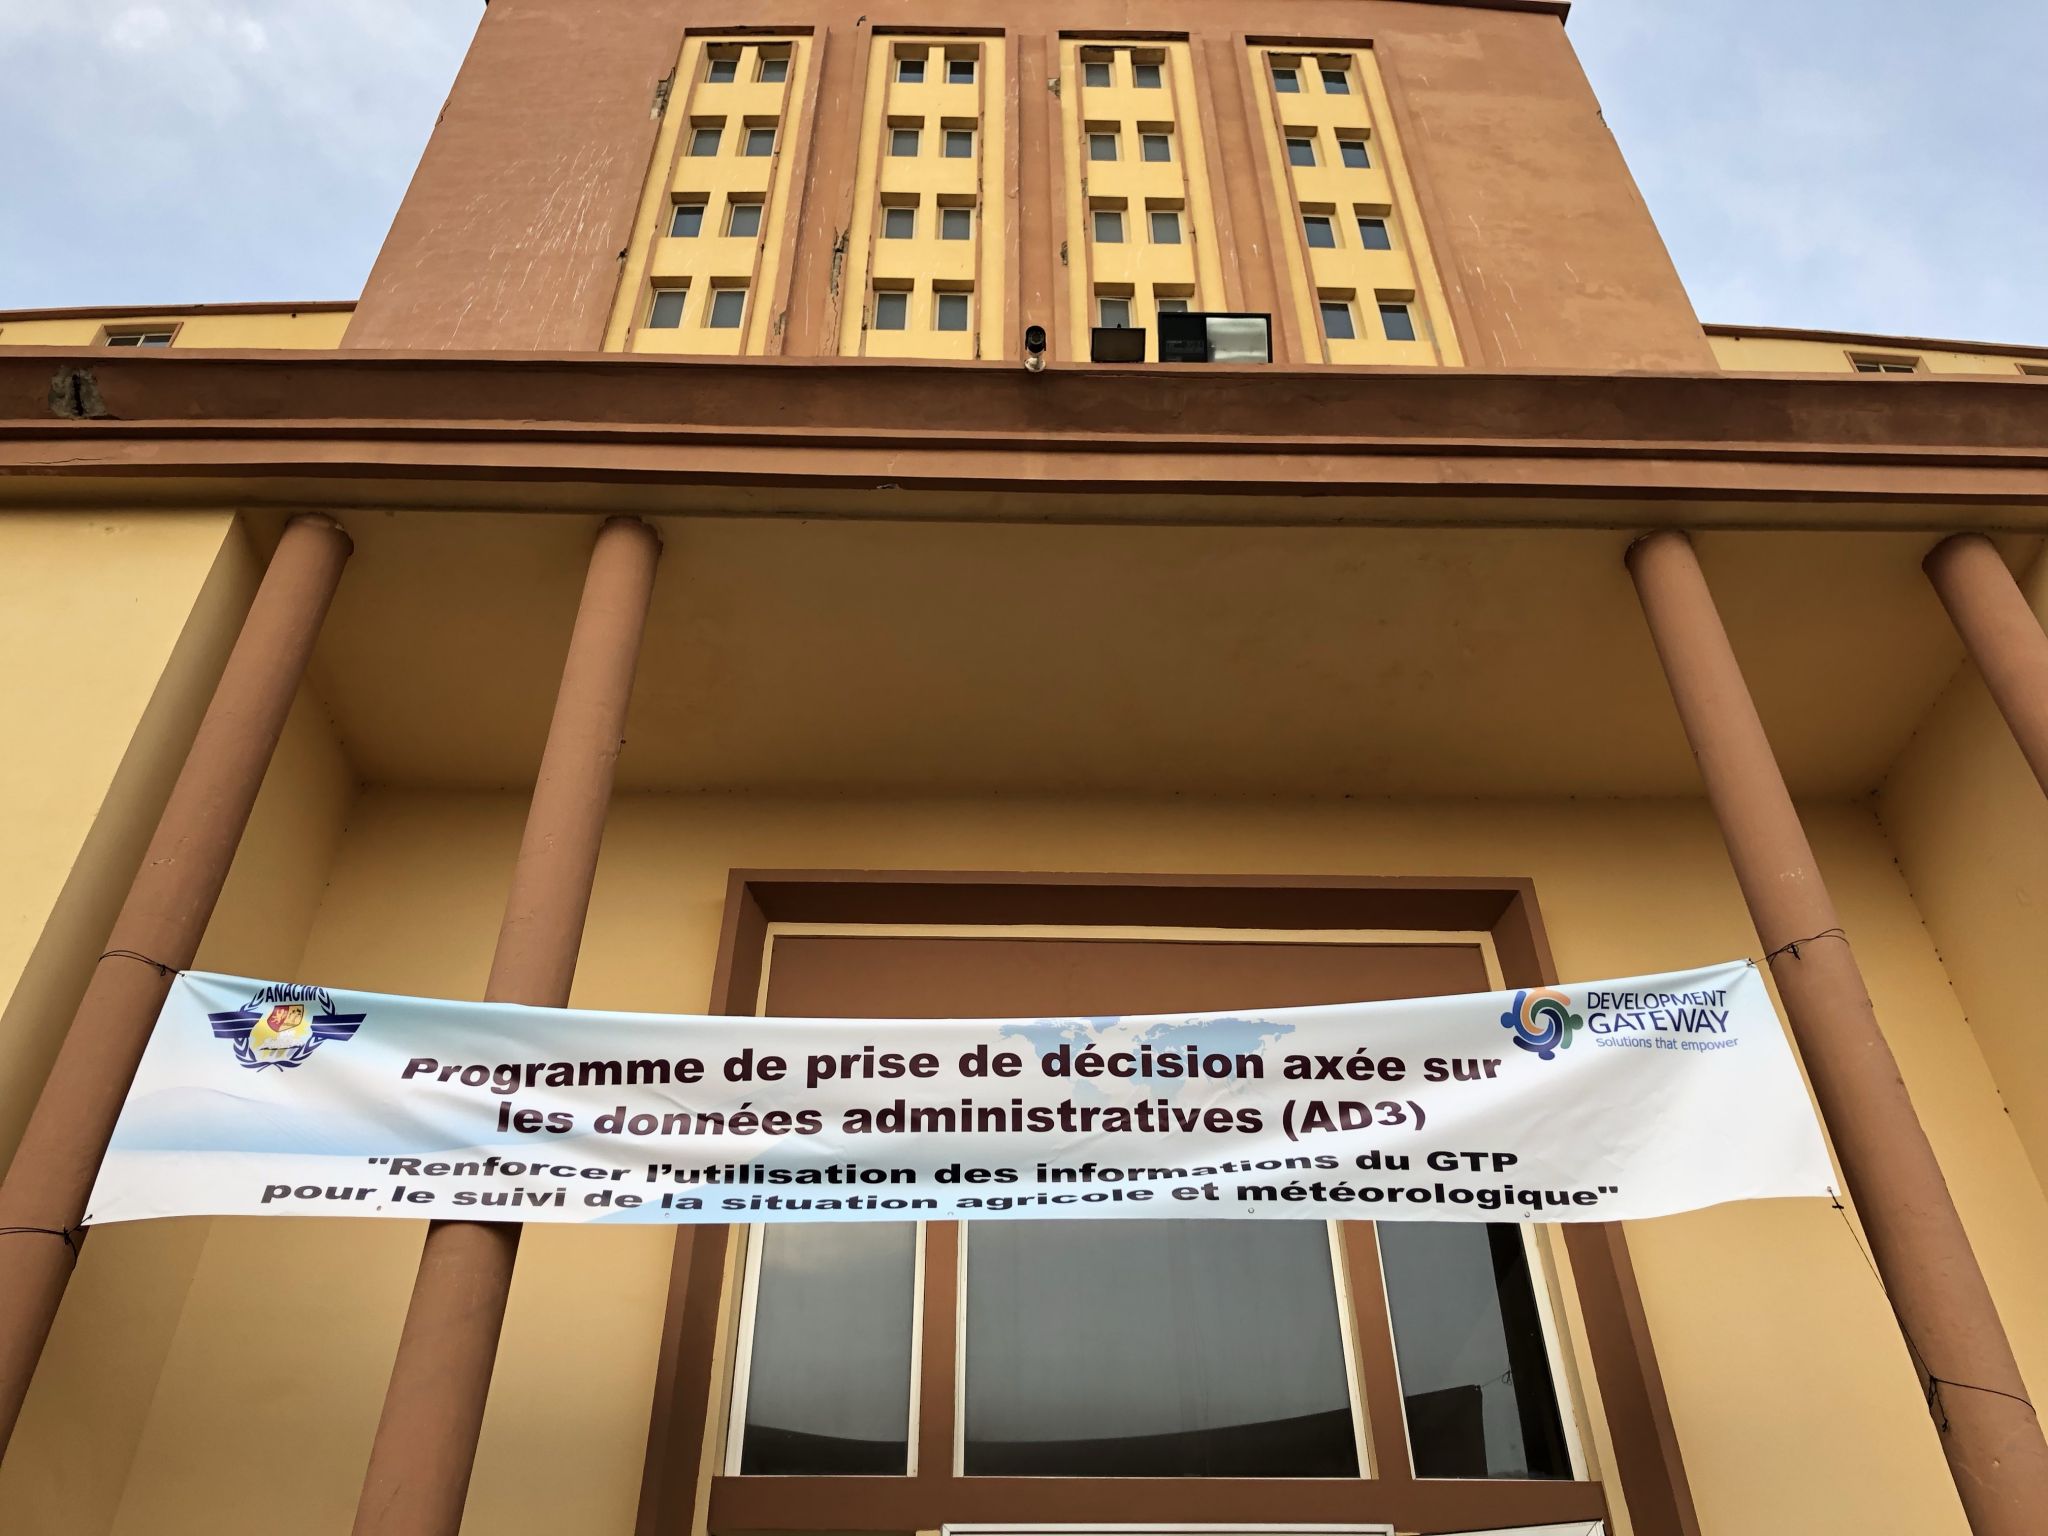 AD3 Banner in Dakar, Senegal